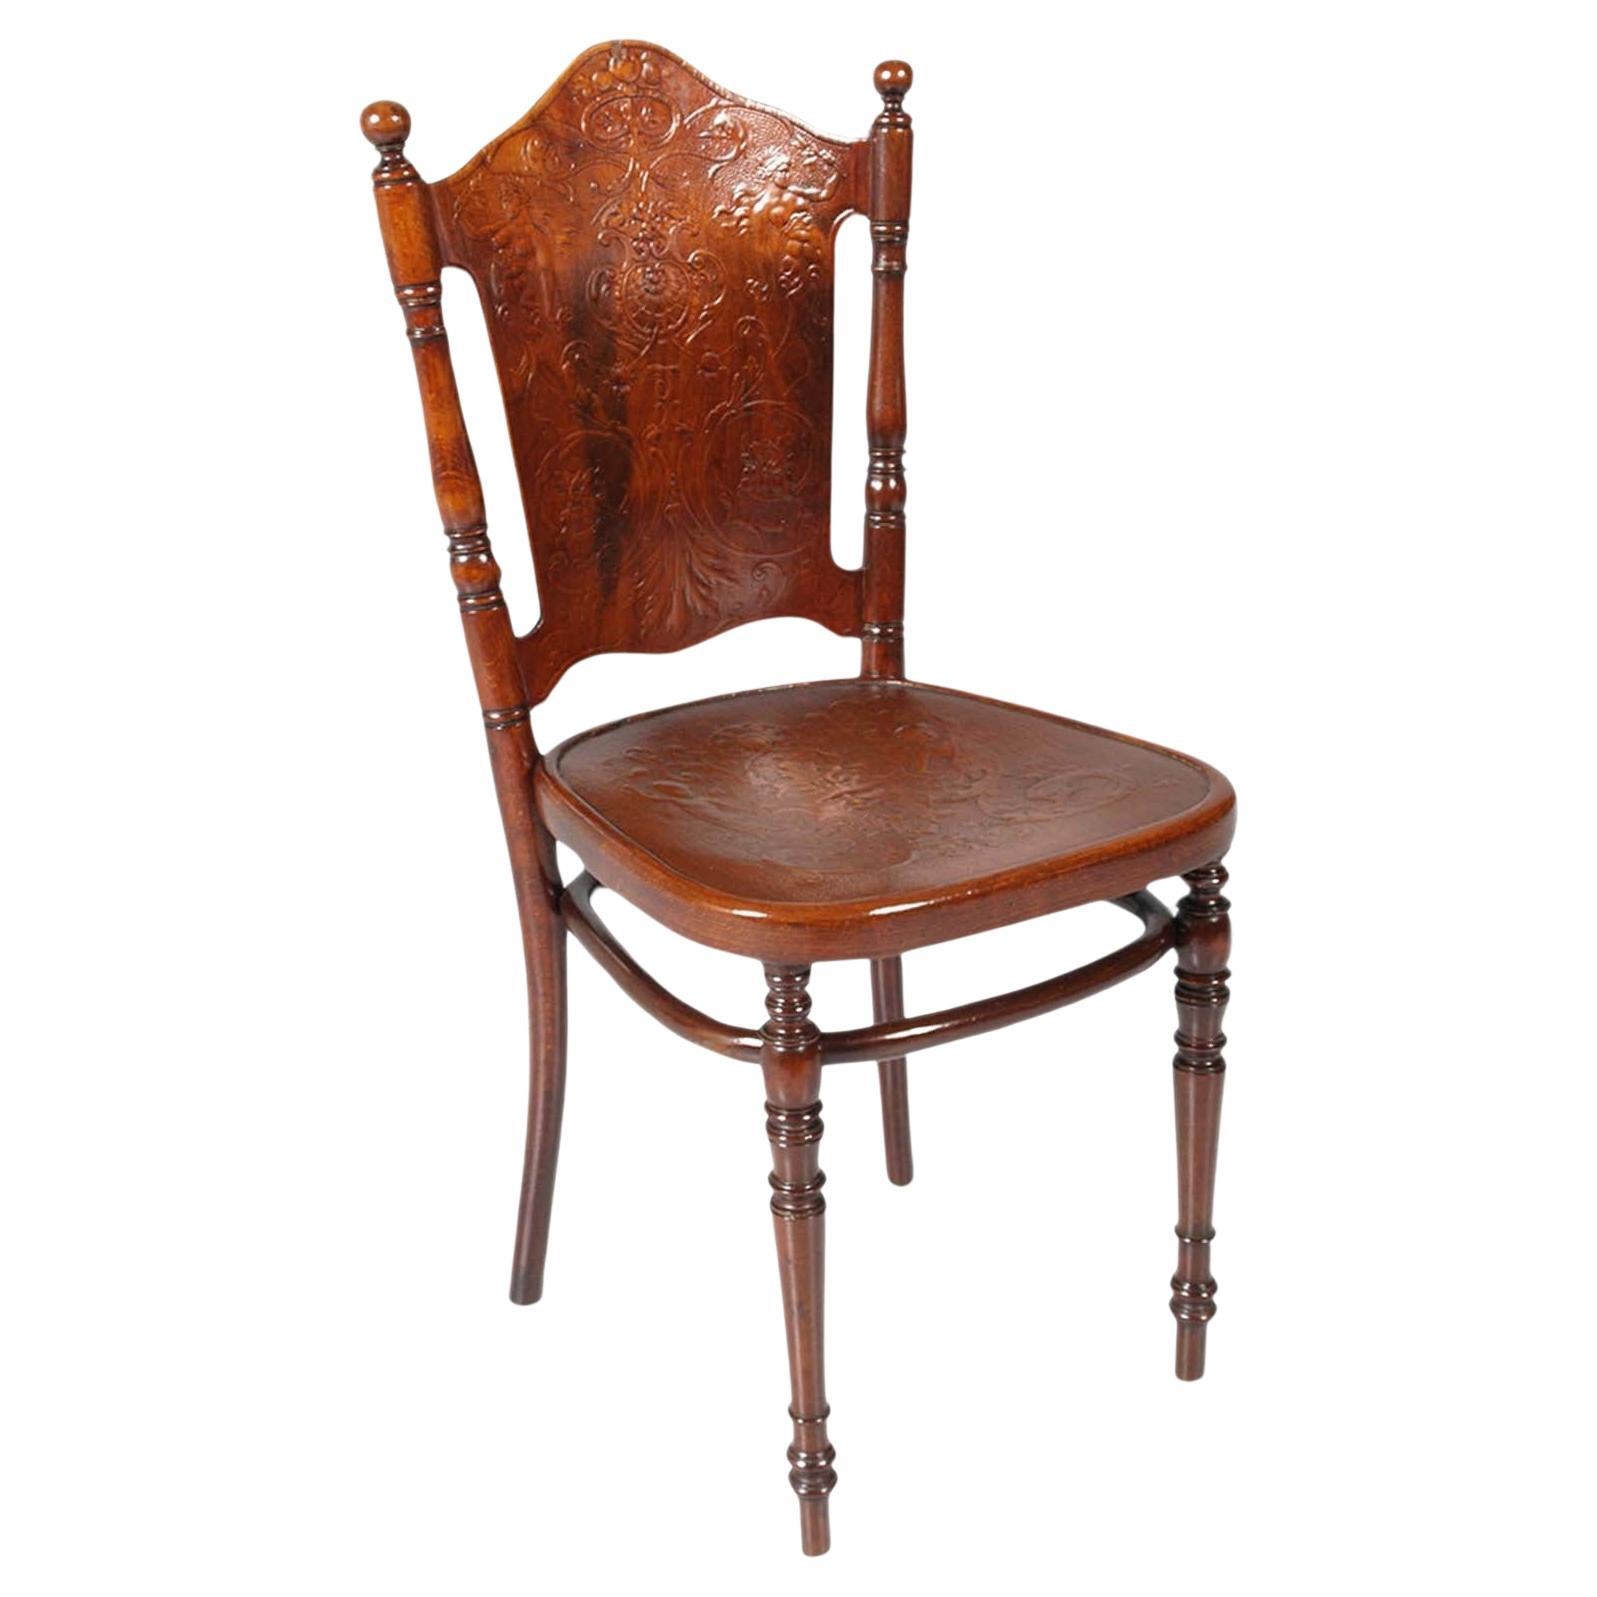 Vienna Chair, circa 1875, Jacob & Josef Kohn. Bent, Turned and Stained Wood